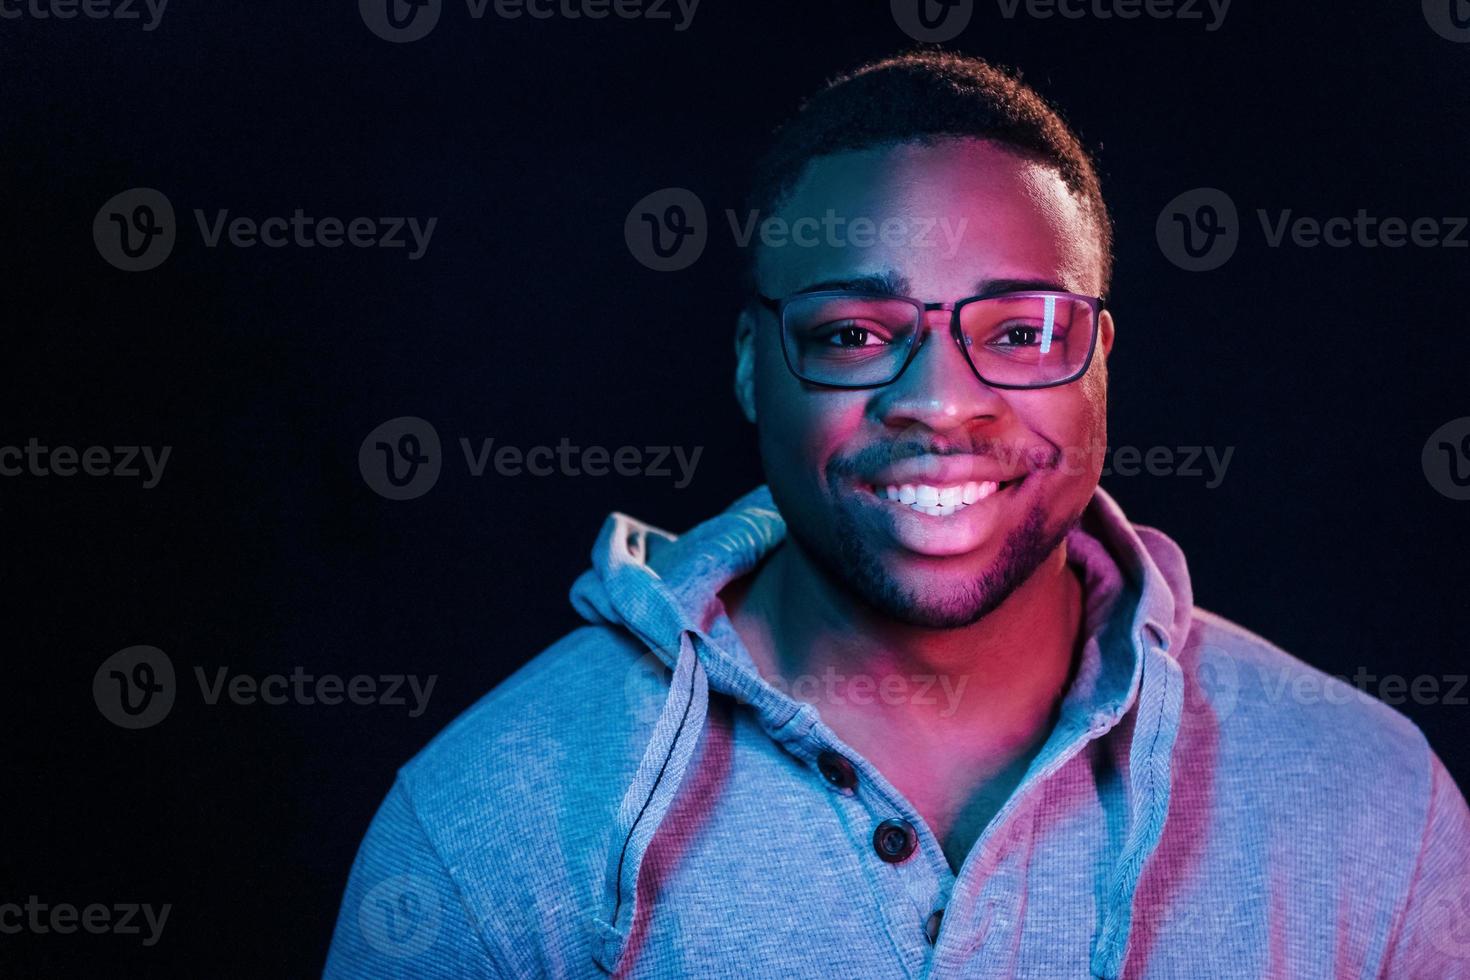 uppriktig leende. trogen neon belysning. ung afrikansk amerikan man i de studio foto